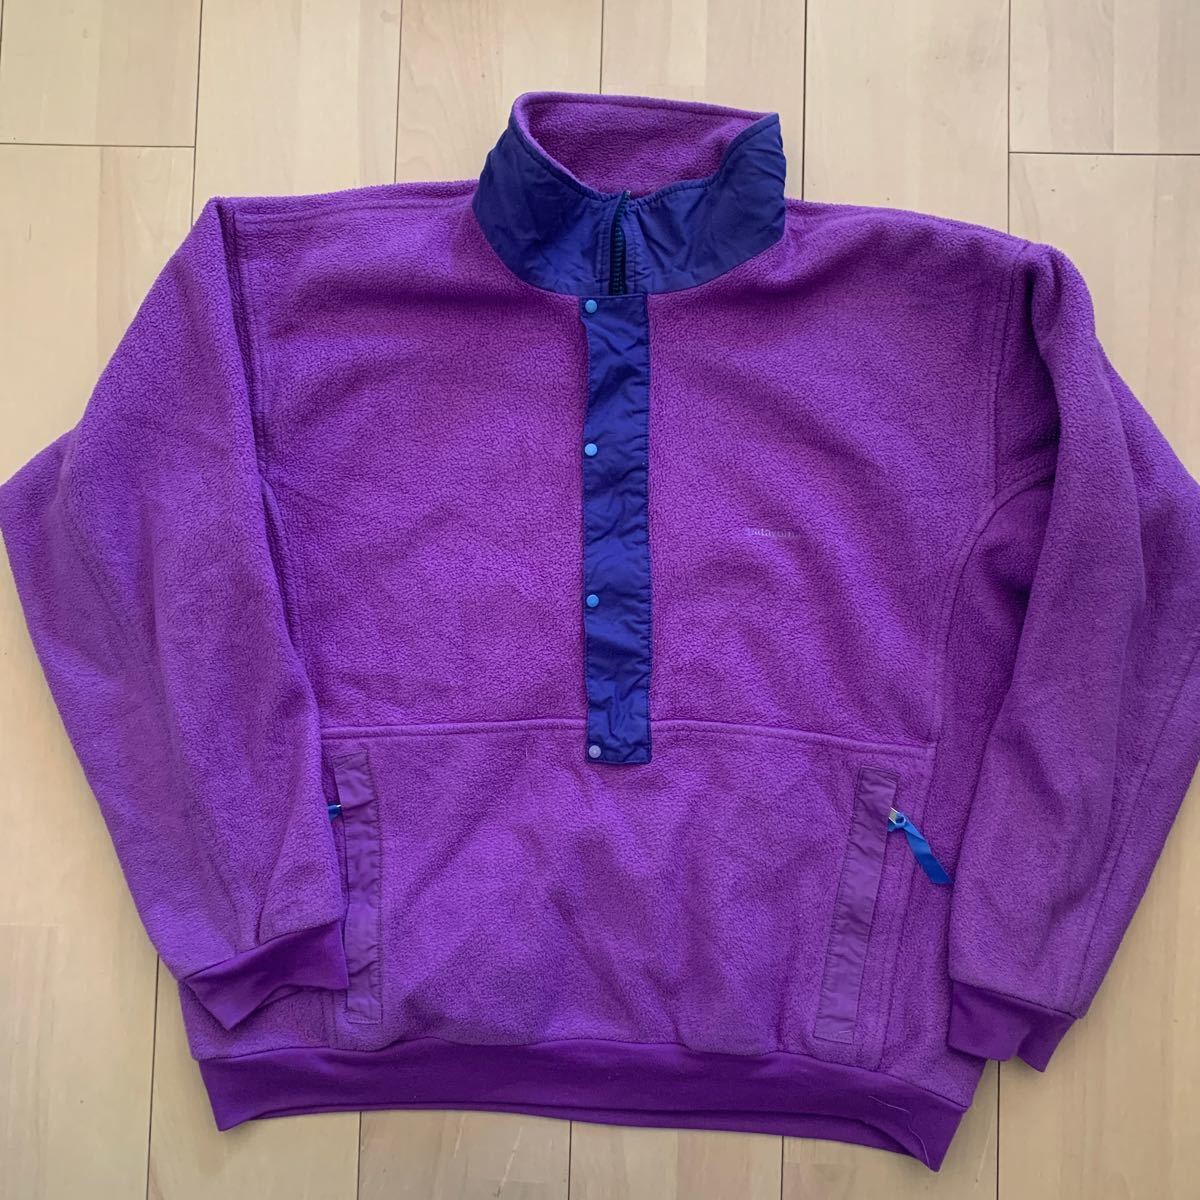 90s【Patagonia】USA製 Half-Zip Fleece jacket パタゴニア プルオーバー フリースジャケット XL パープル style 25110 S1 ハーフジップ